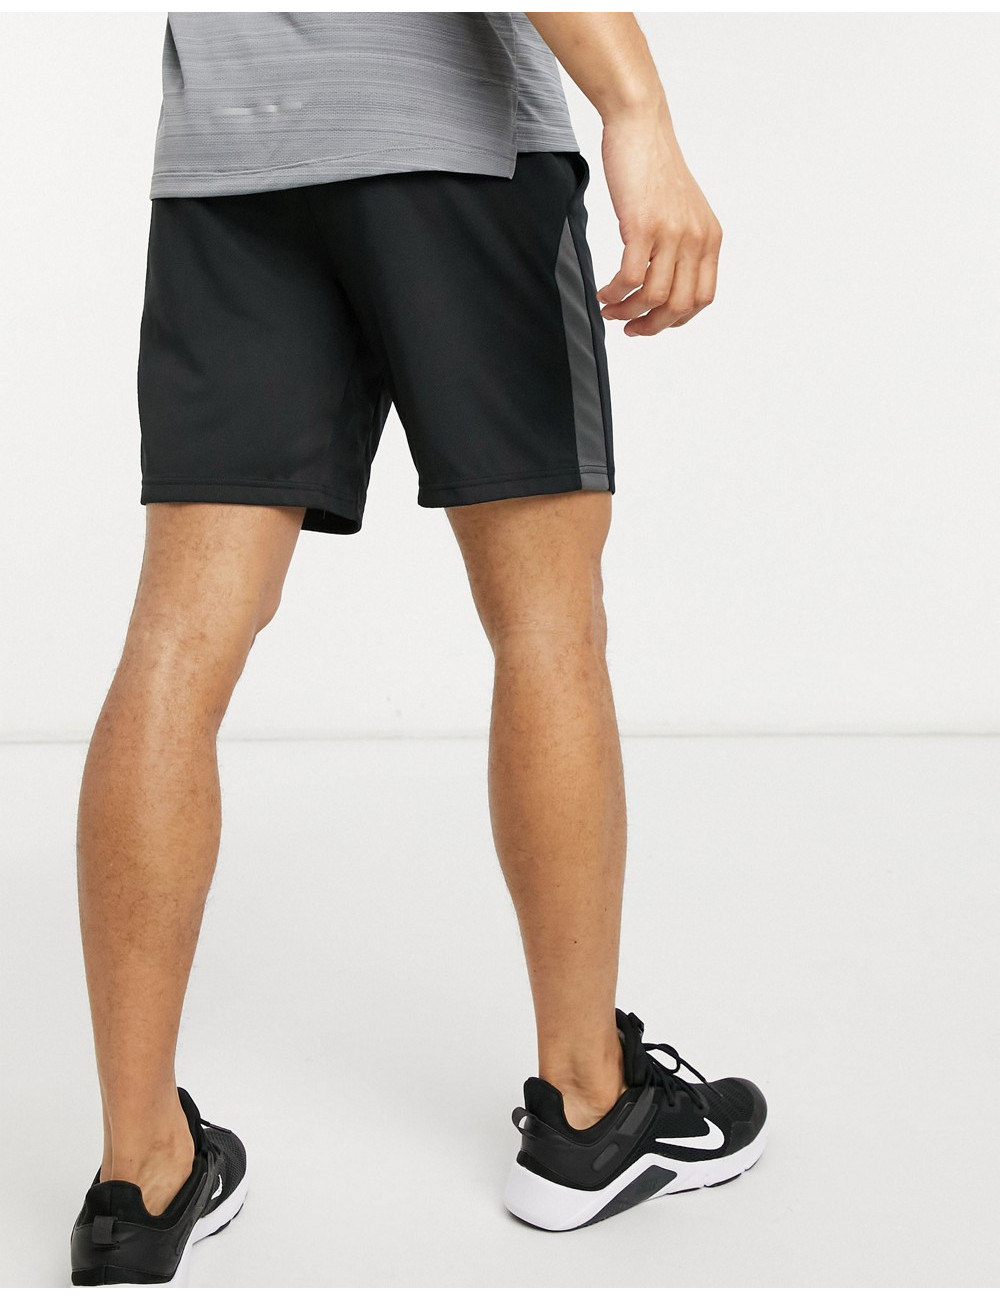 Nike Training shorts in black